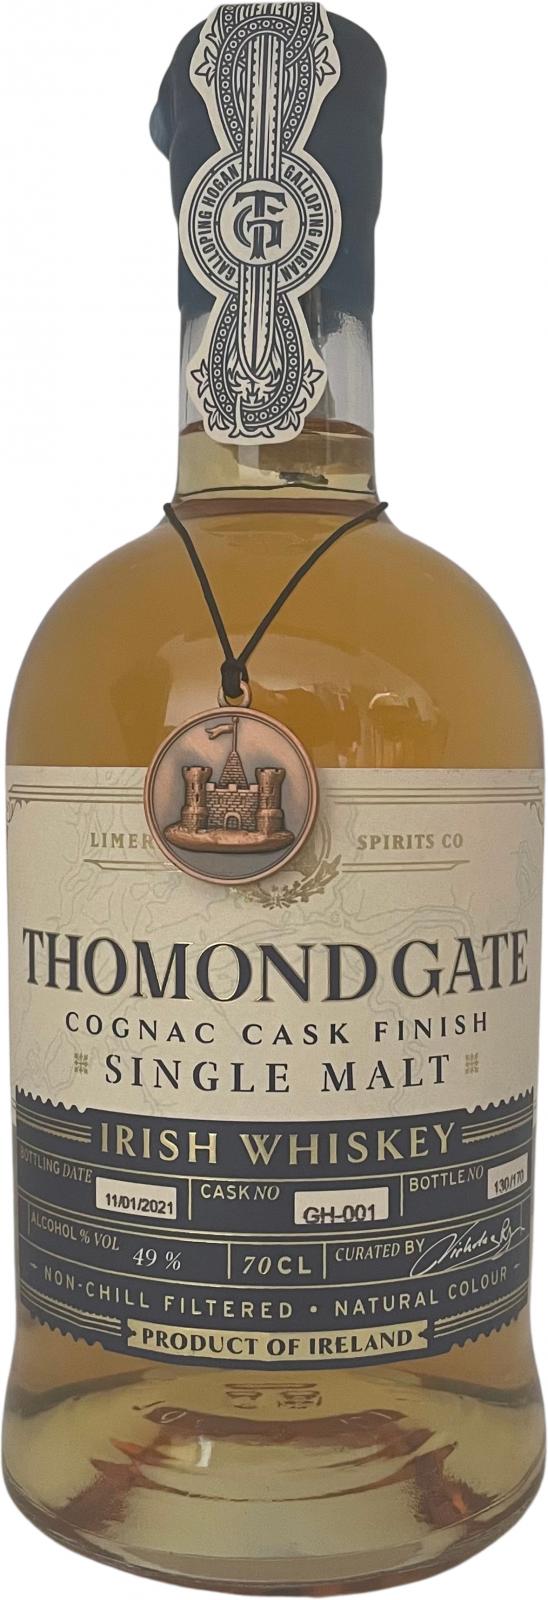 Thomond Gate Galloping Hogan TLS Cognac Cask Finish GH-001 49% 700ml